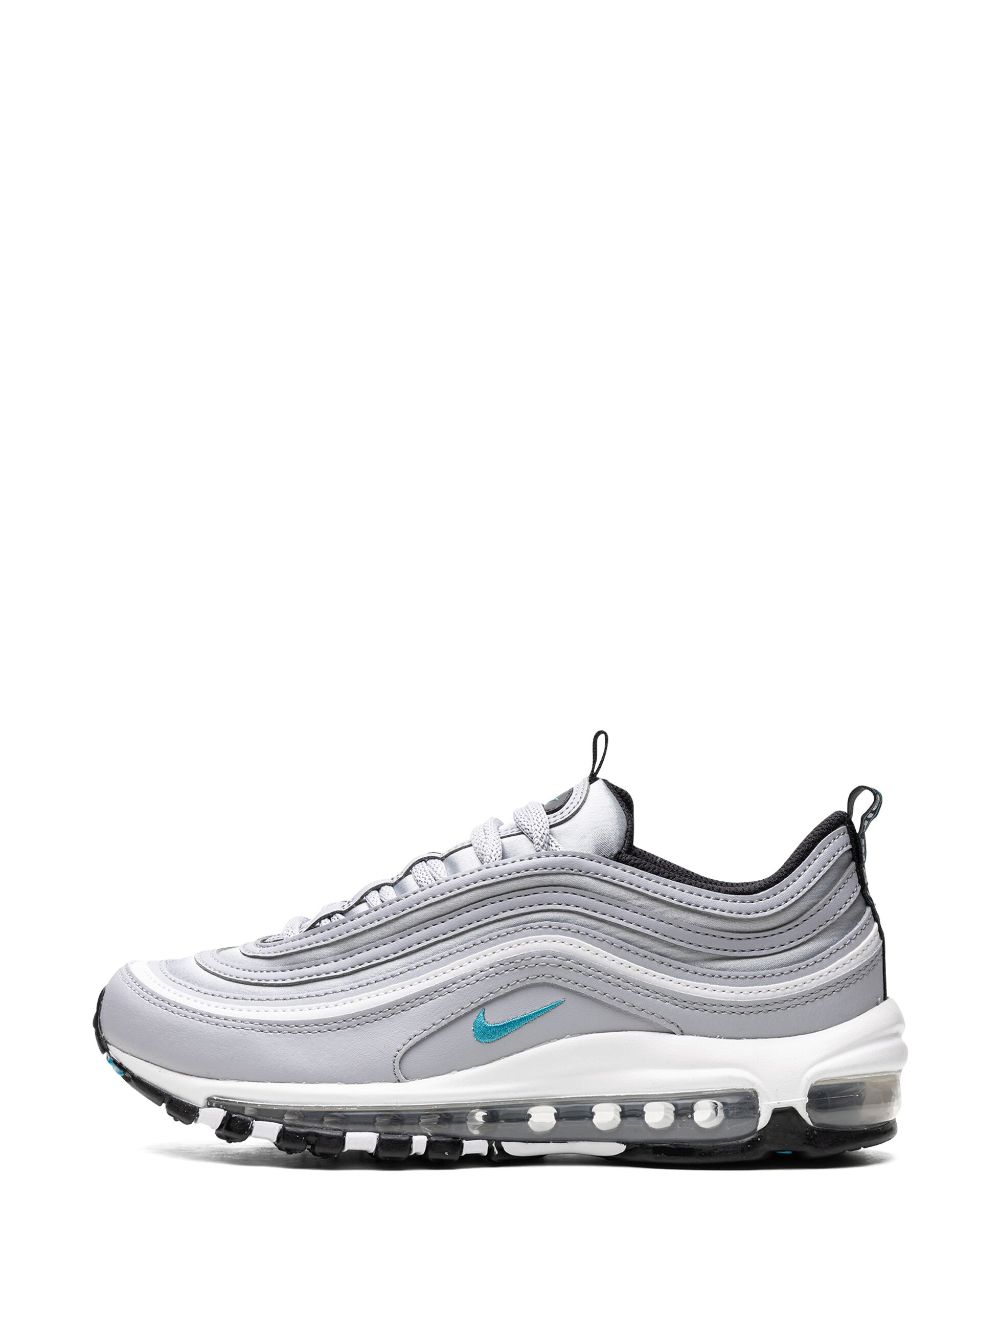 Shop Nike Air Max 97 "silver Aqua" Sneakers